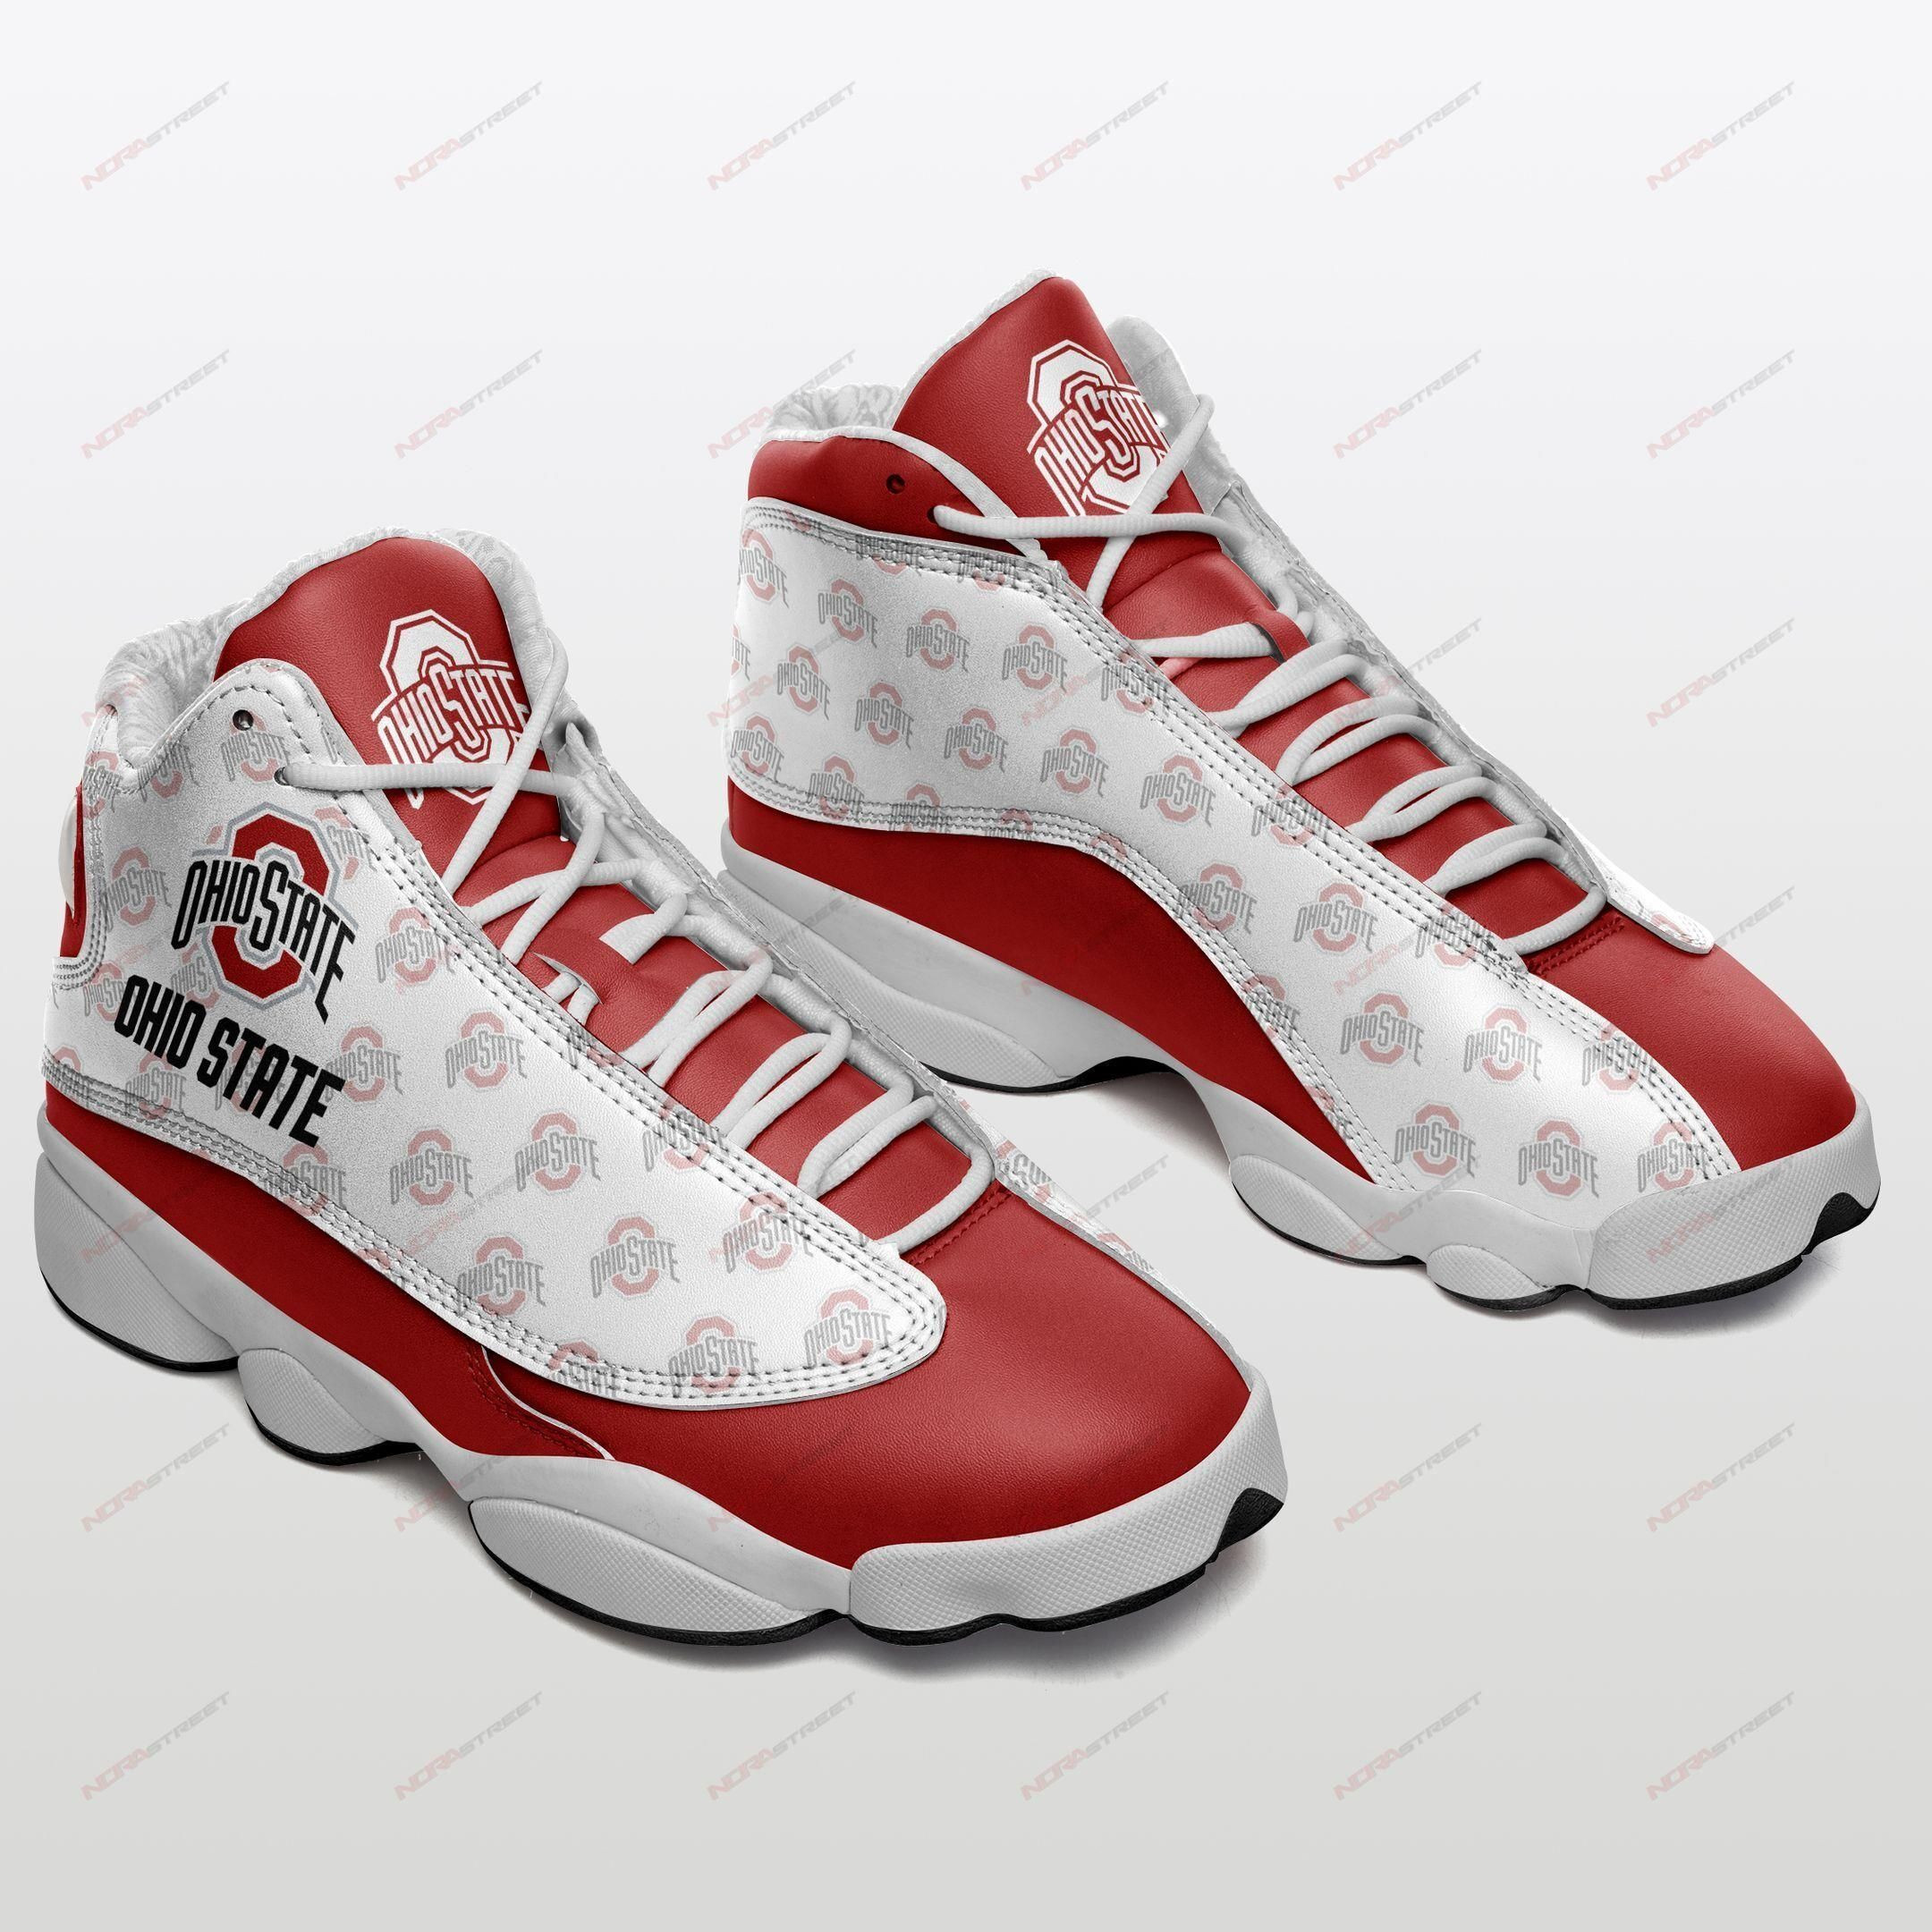 Ohio state buckeyes air jordan 13 sneakers sport shoes for fans - men-11